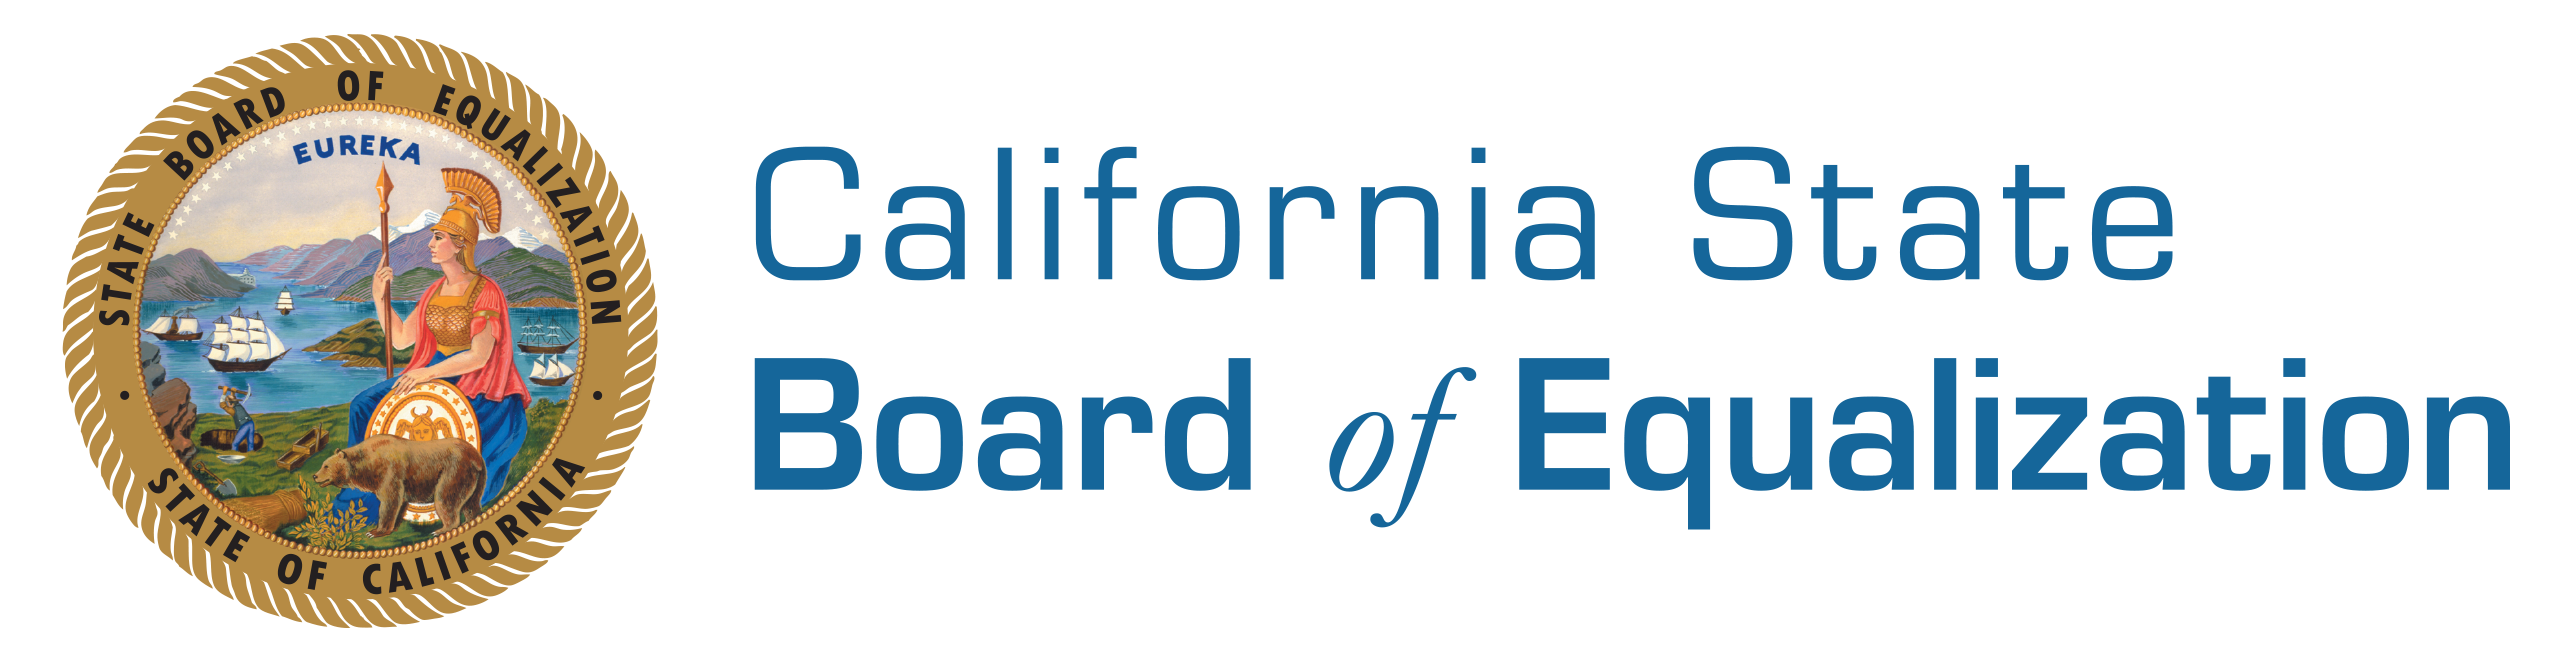 Board of Equalization Logo